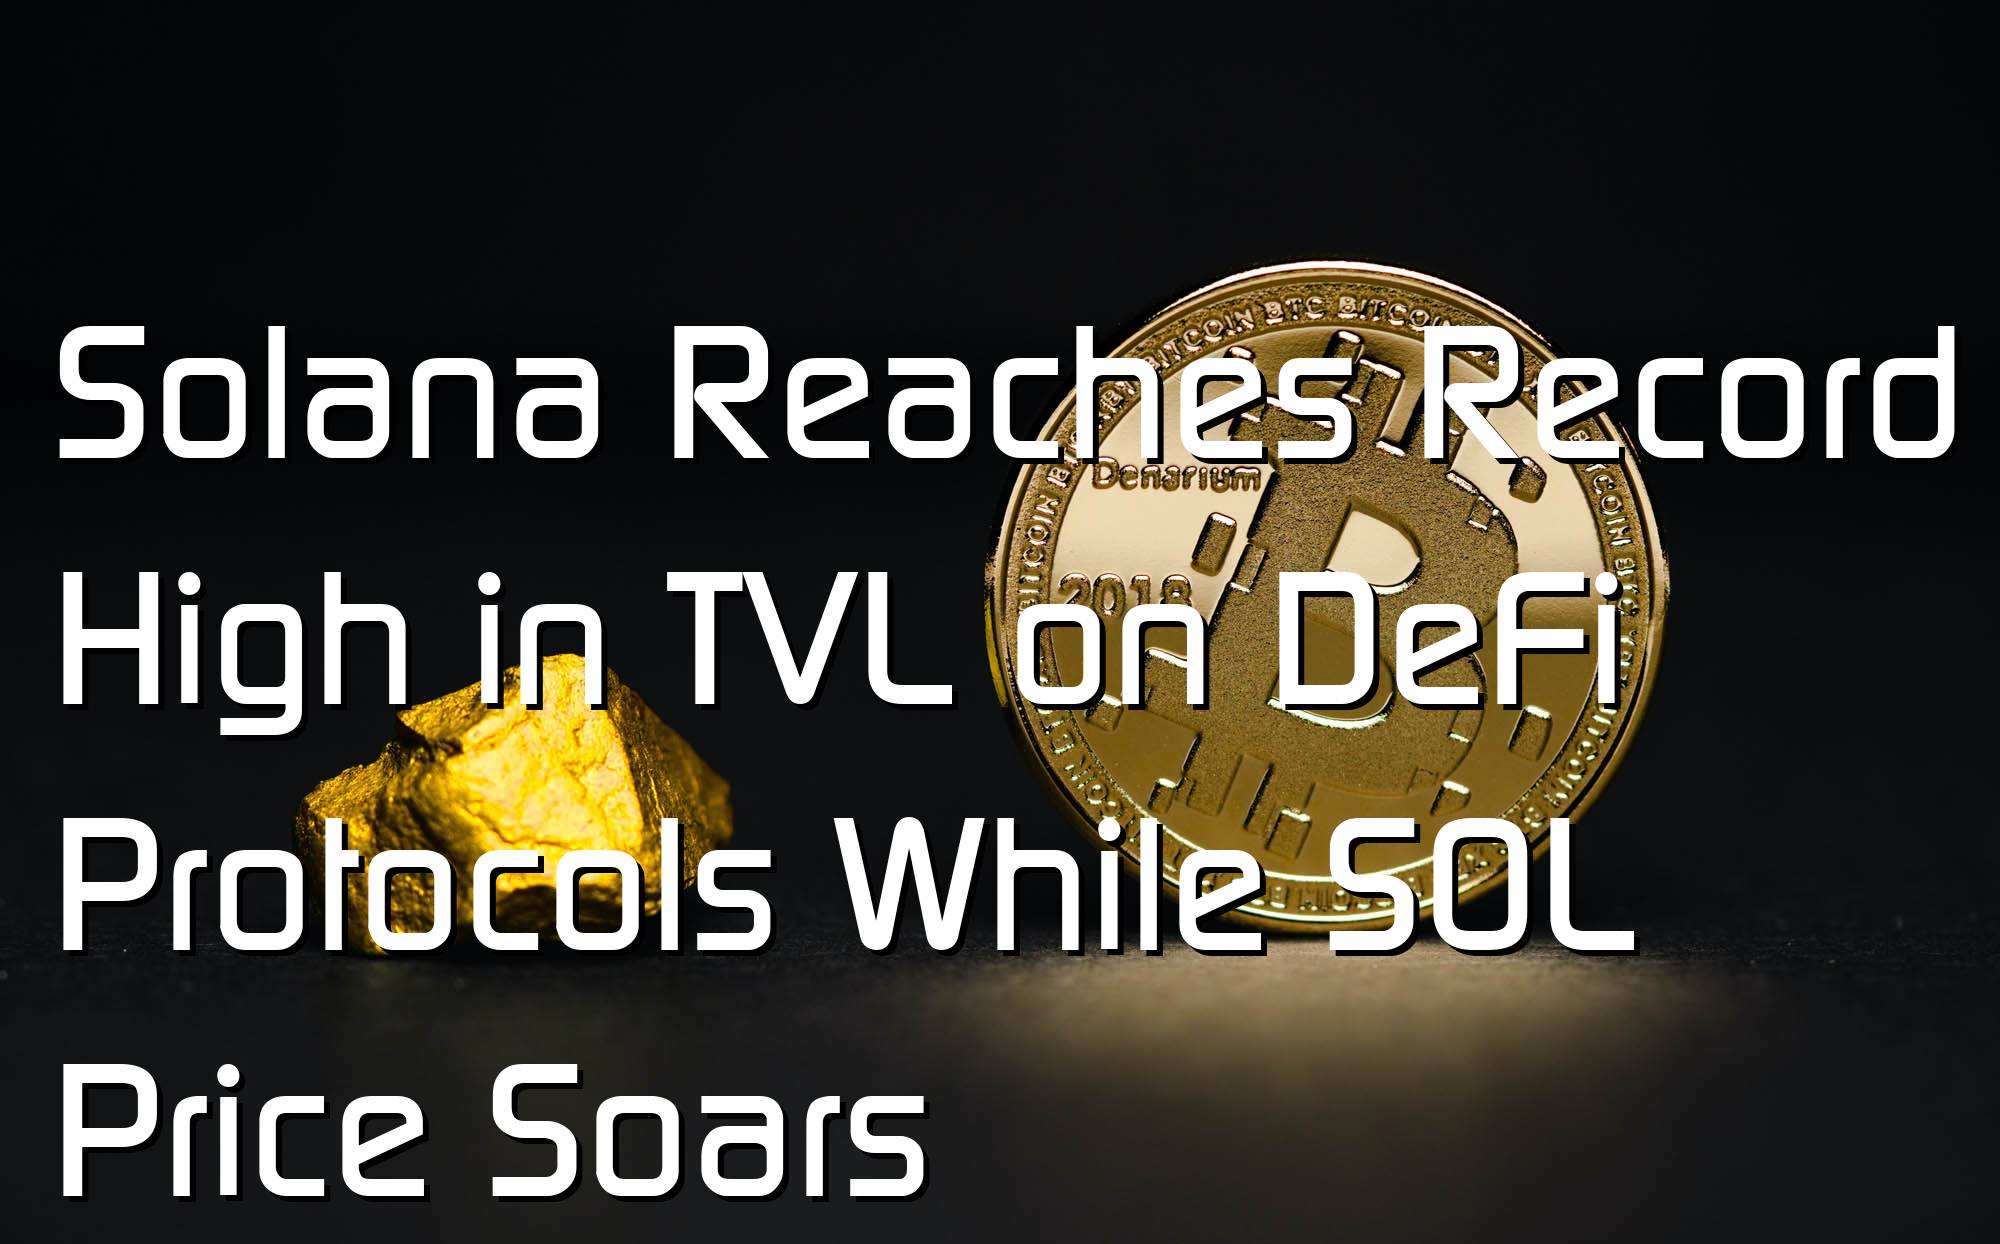 @$62743.31 Solana Reaches Record High in TVL on DeFi Protocols While SOL Price Soars